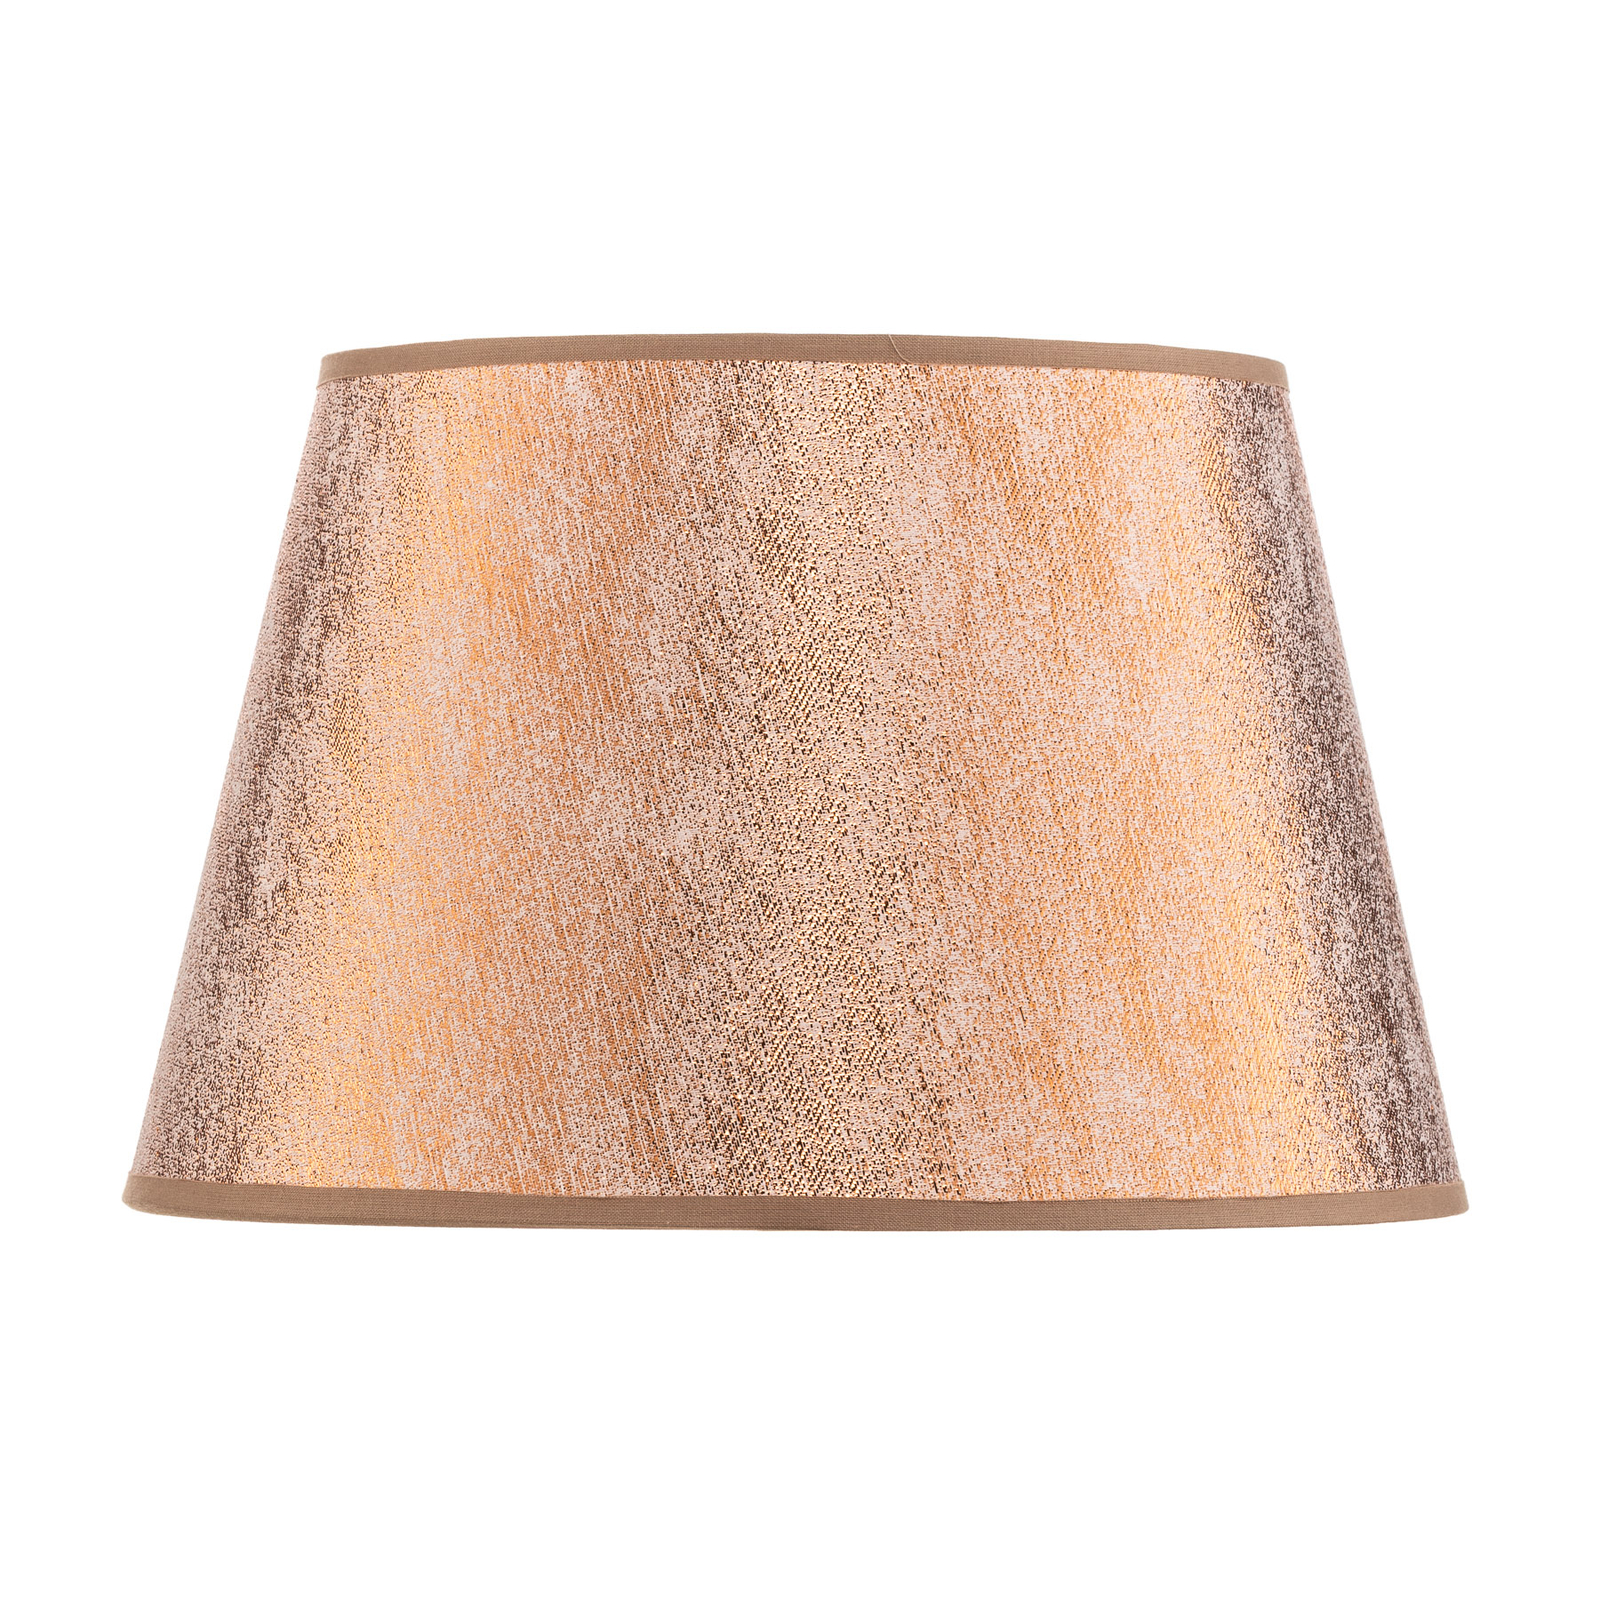 Cone lampshade height 18 cm, copper-metallised